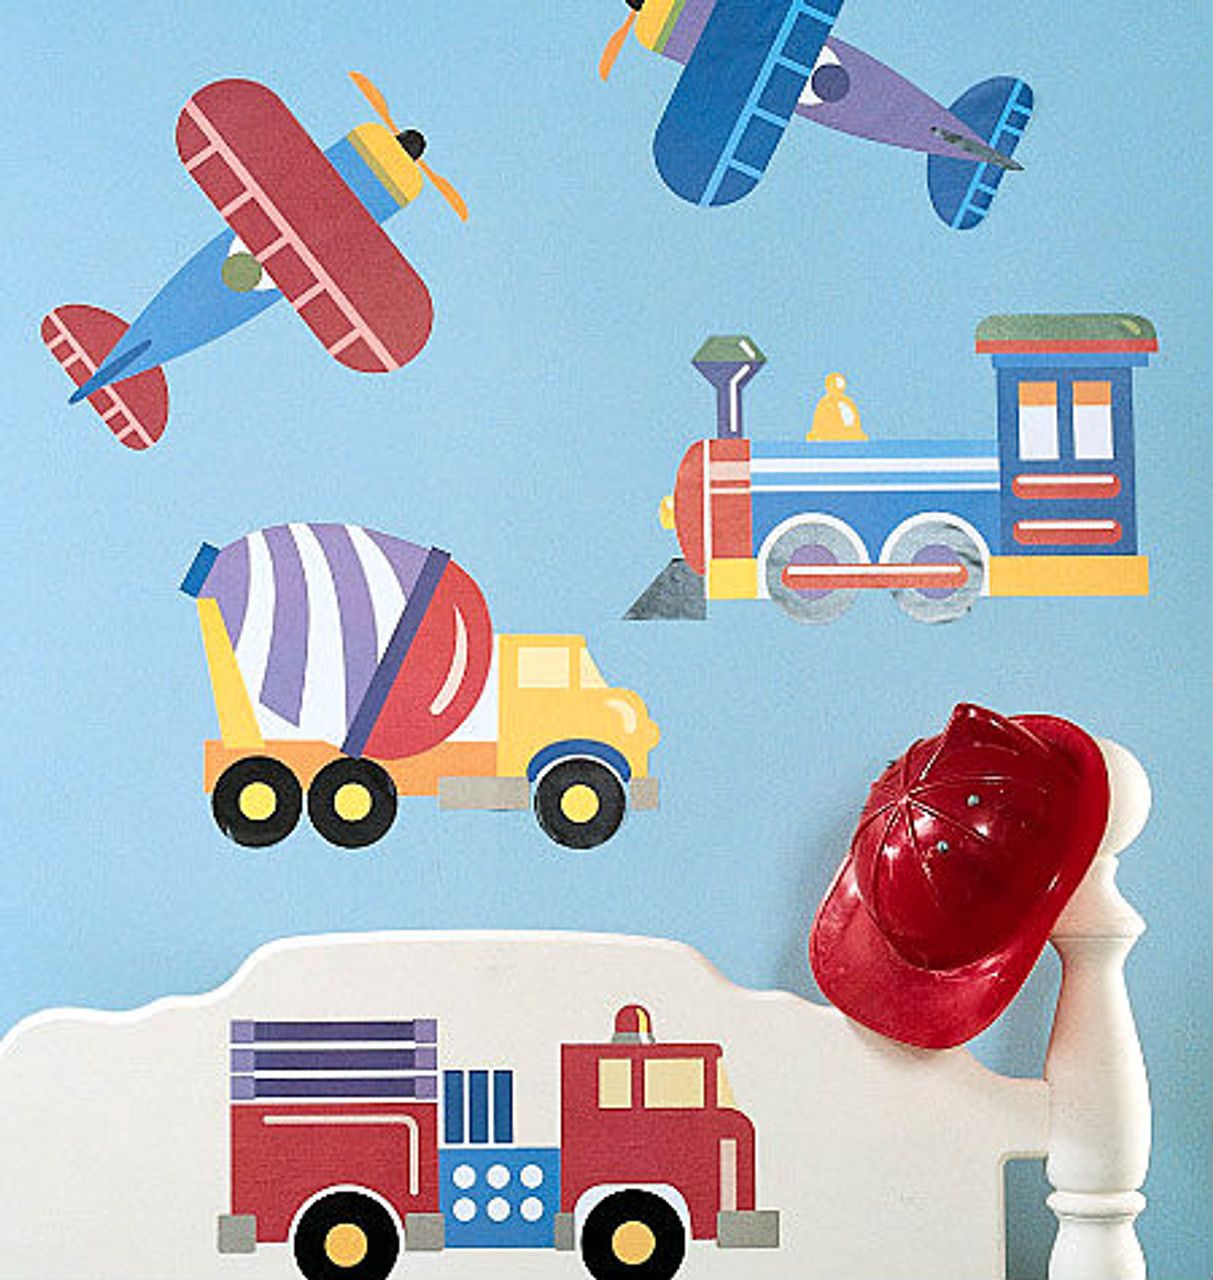 Stitch Wall Decal Vinyl Sticker Gift Wall Art Decorations for Home  Housewares Kids Girls Room Bedroom Nursery Cartoon Decor Poster Gift Lis3 